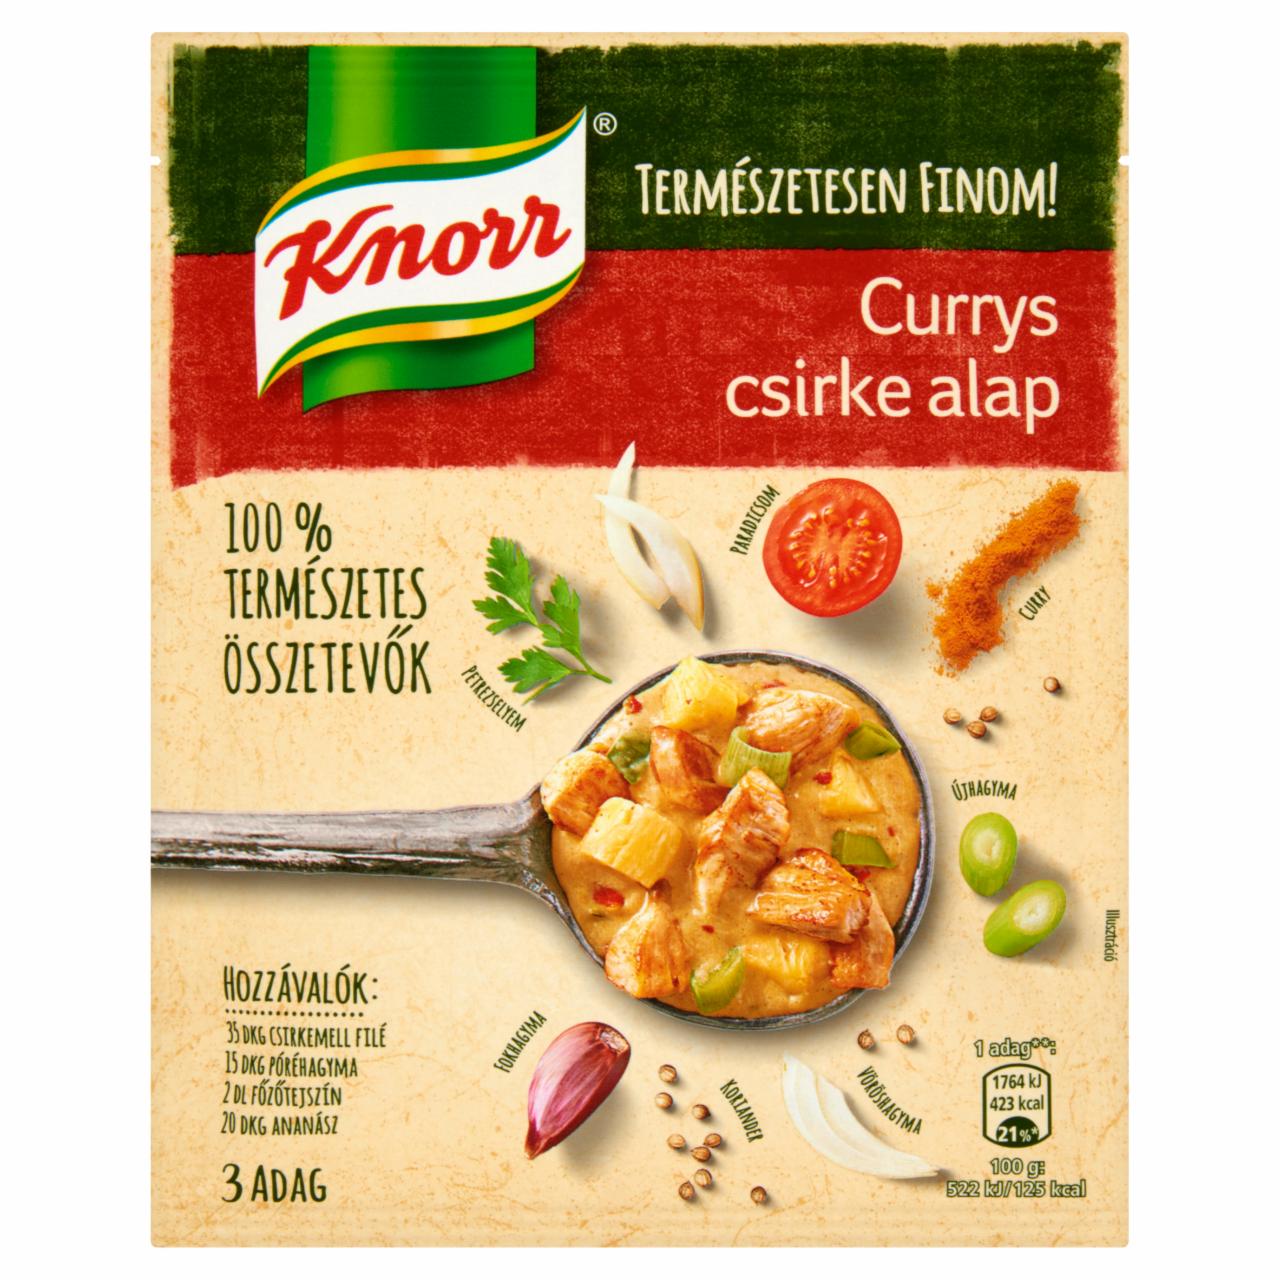 Képek - Knorr currys csirke alap 47 g